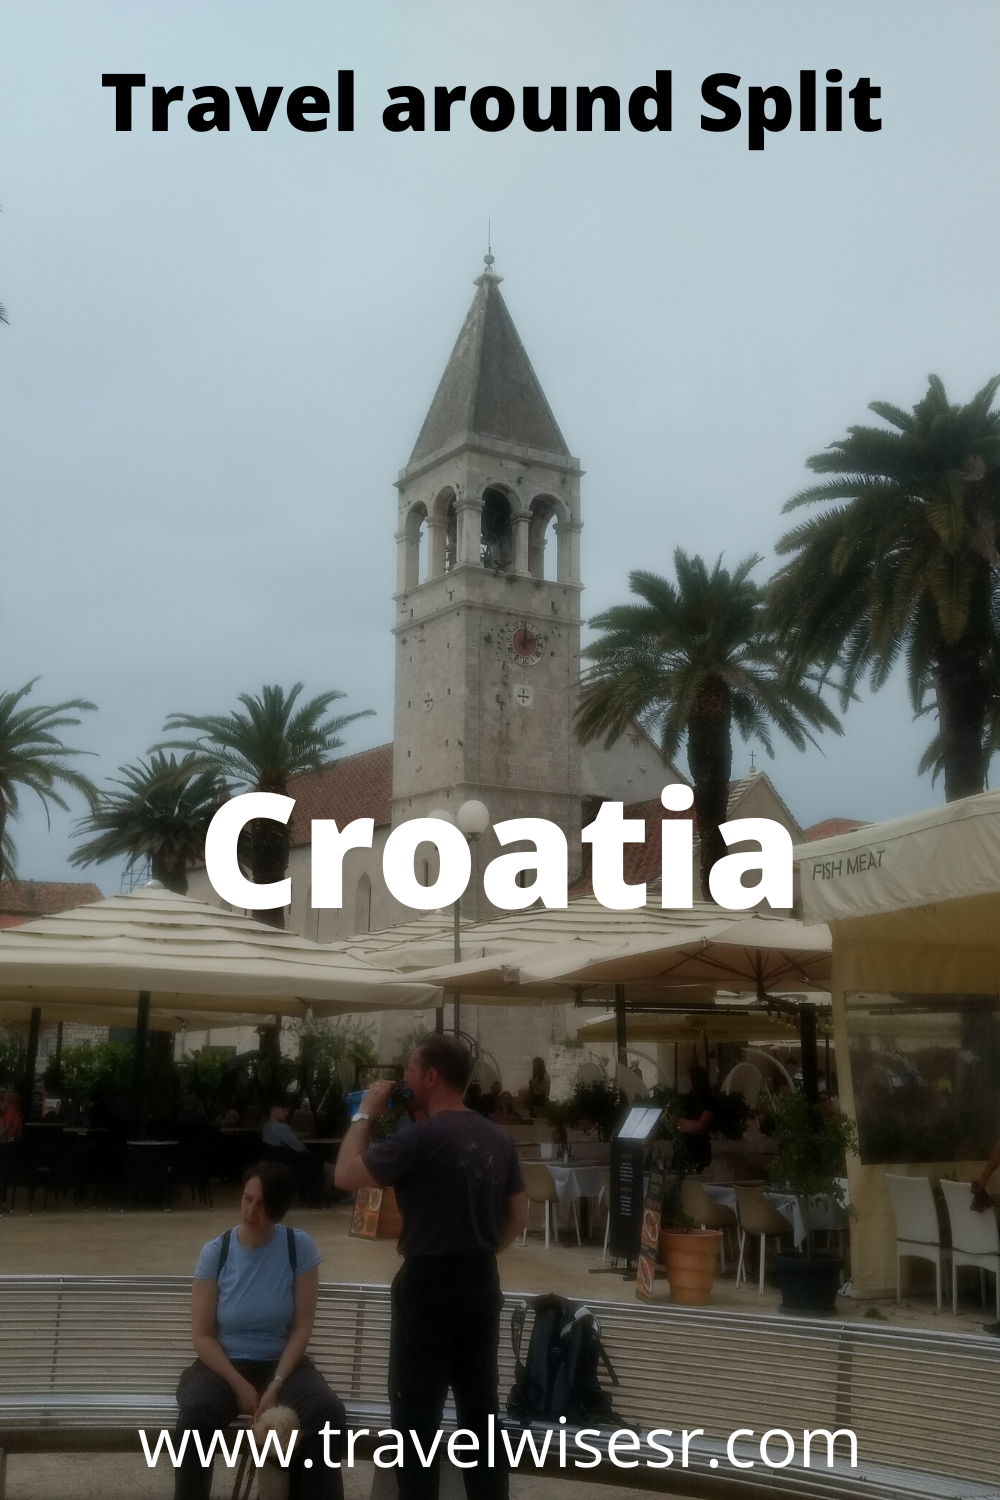 Travel around Split